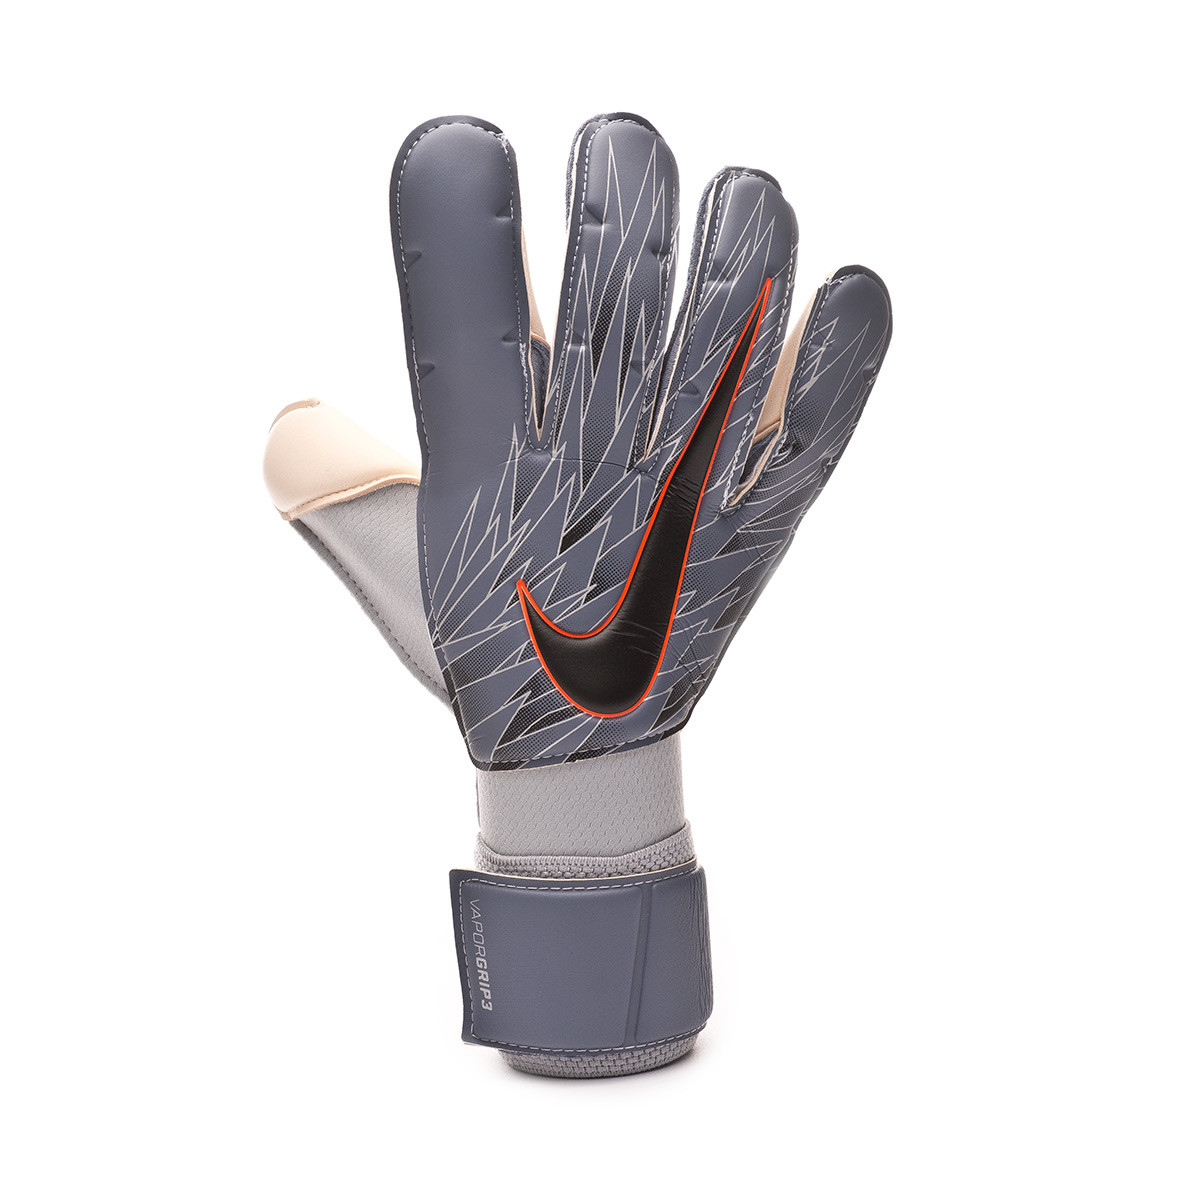 nike thermal football gloves